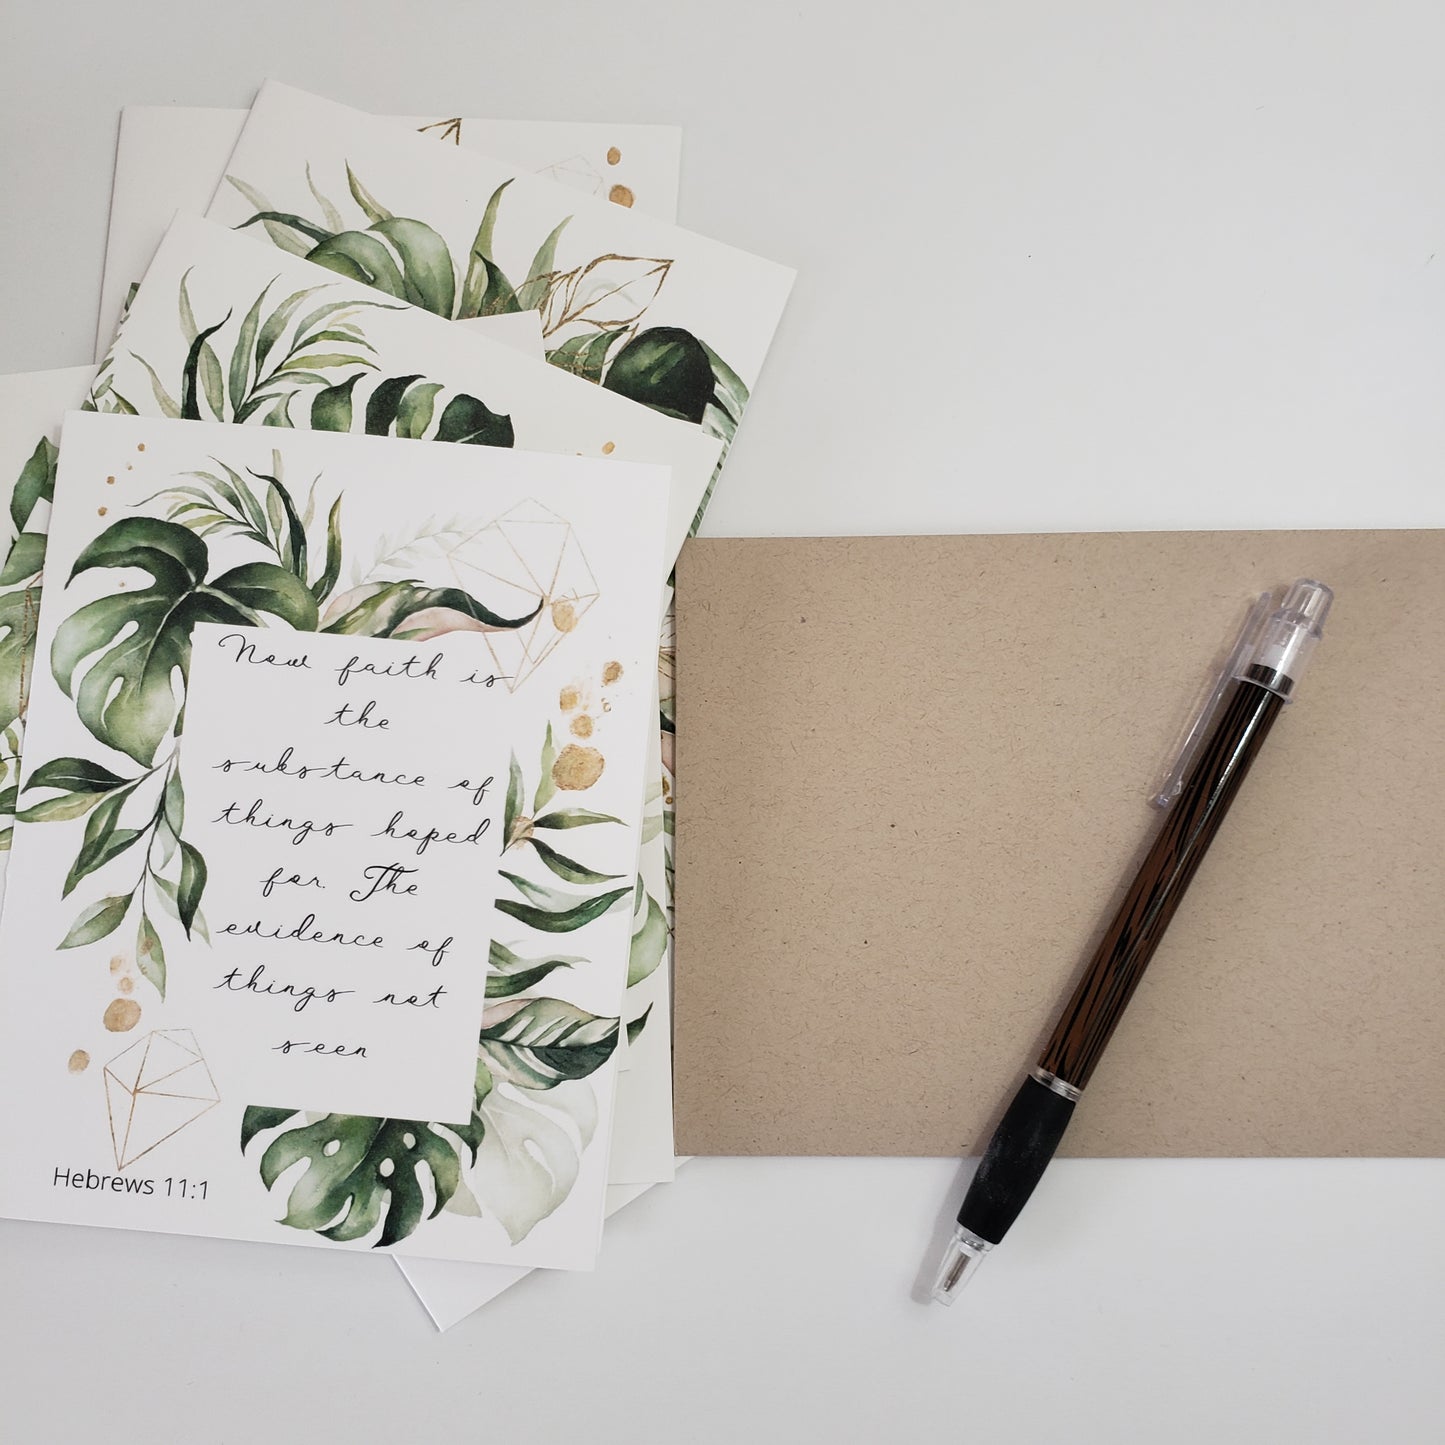 Bible Verse Greeting Cards In Botanical Watercolor Print